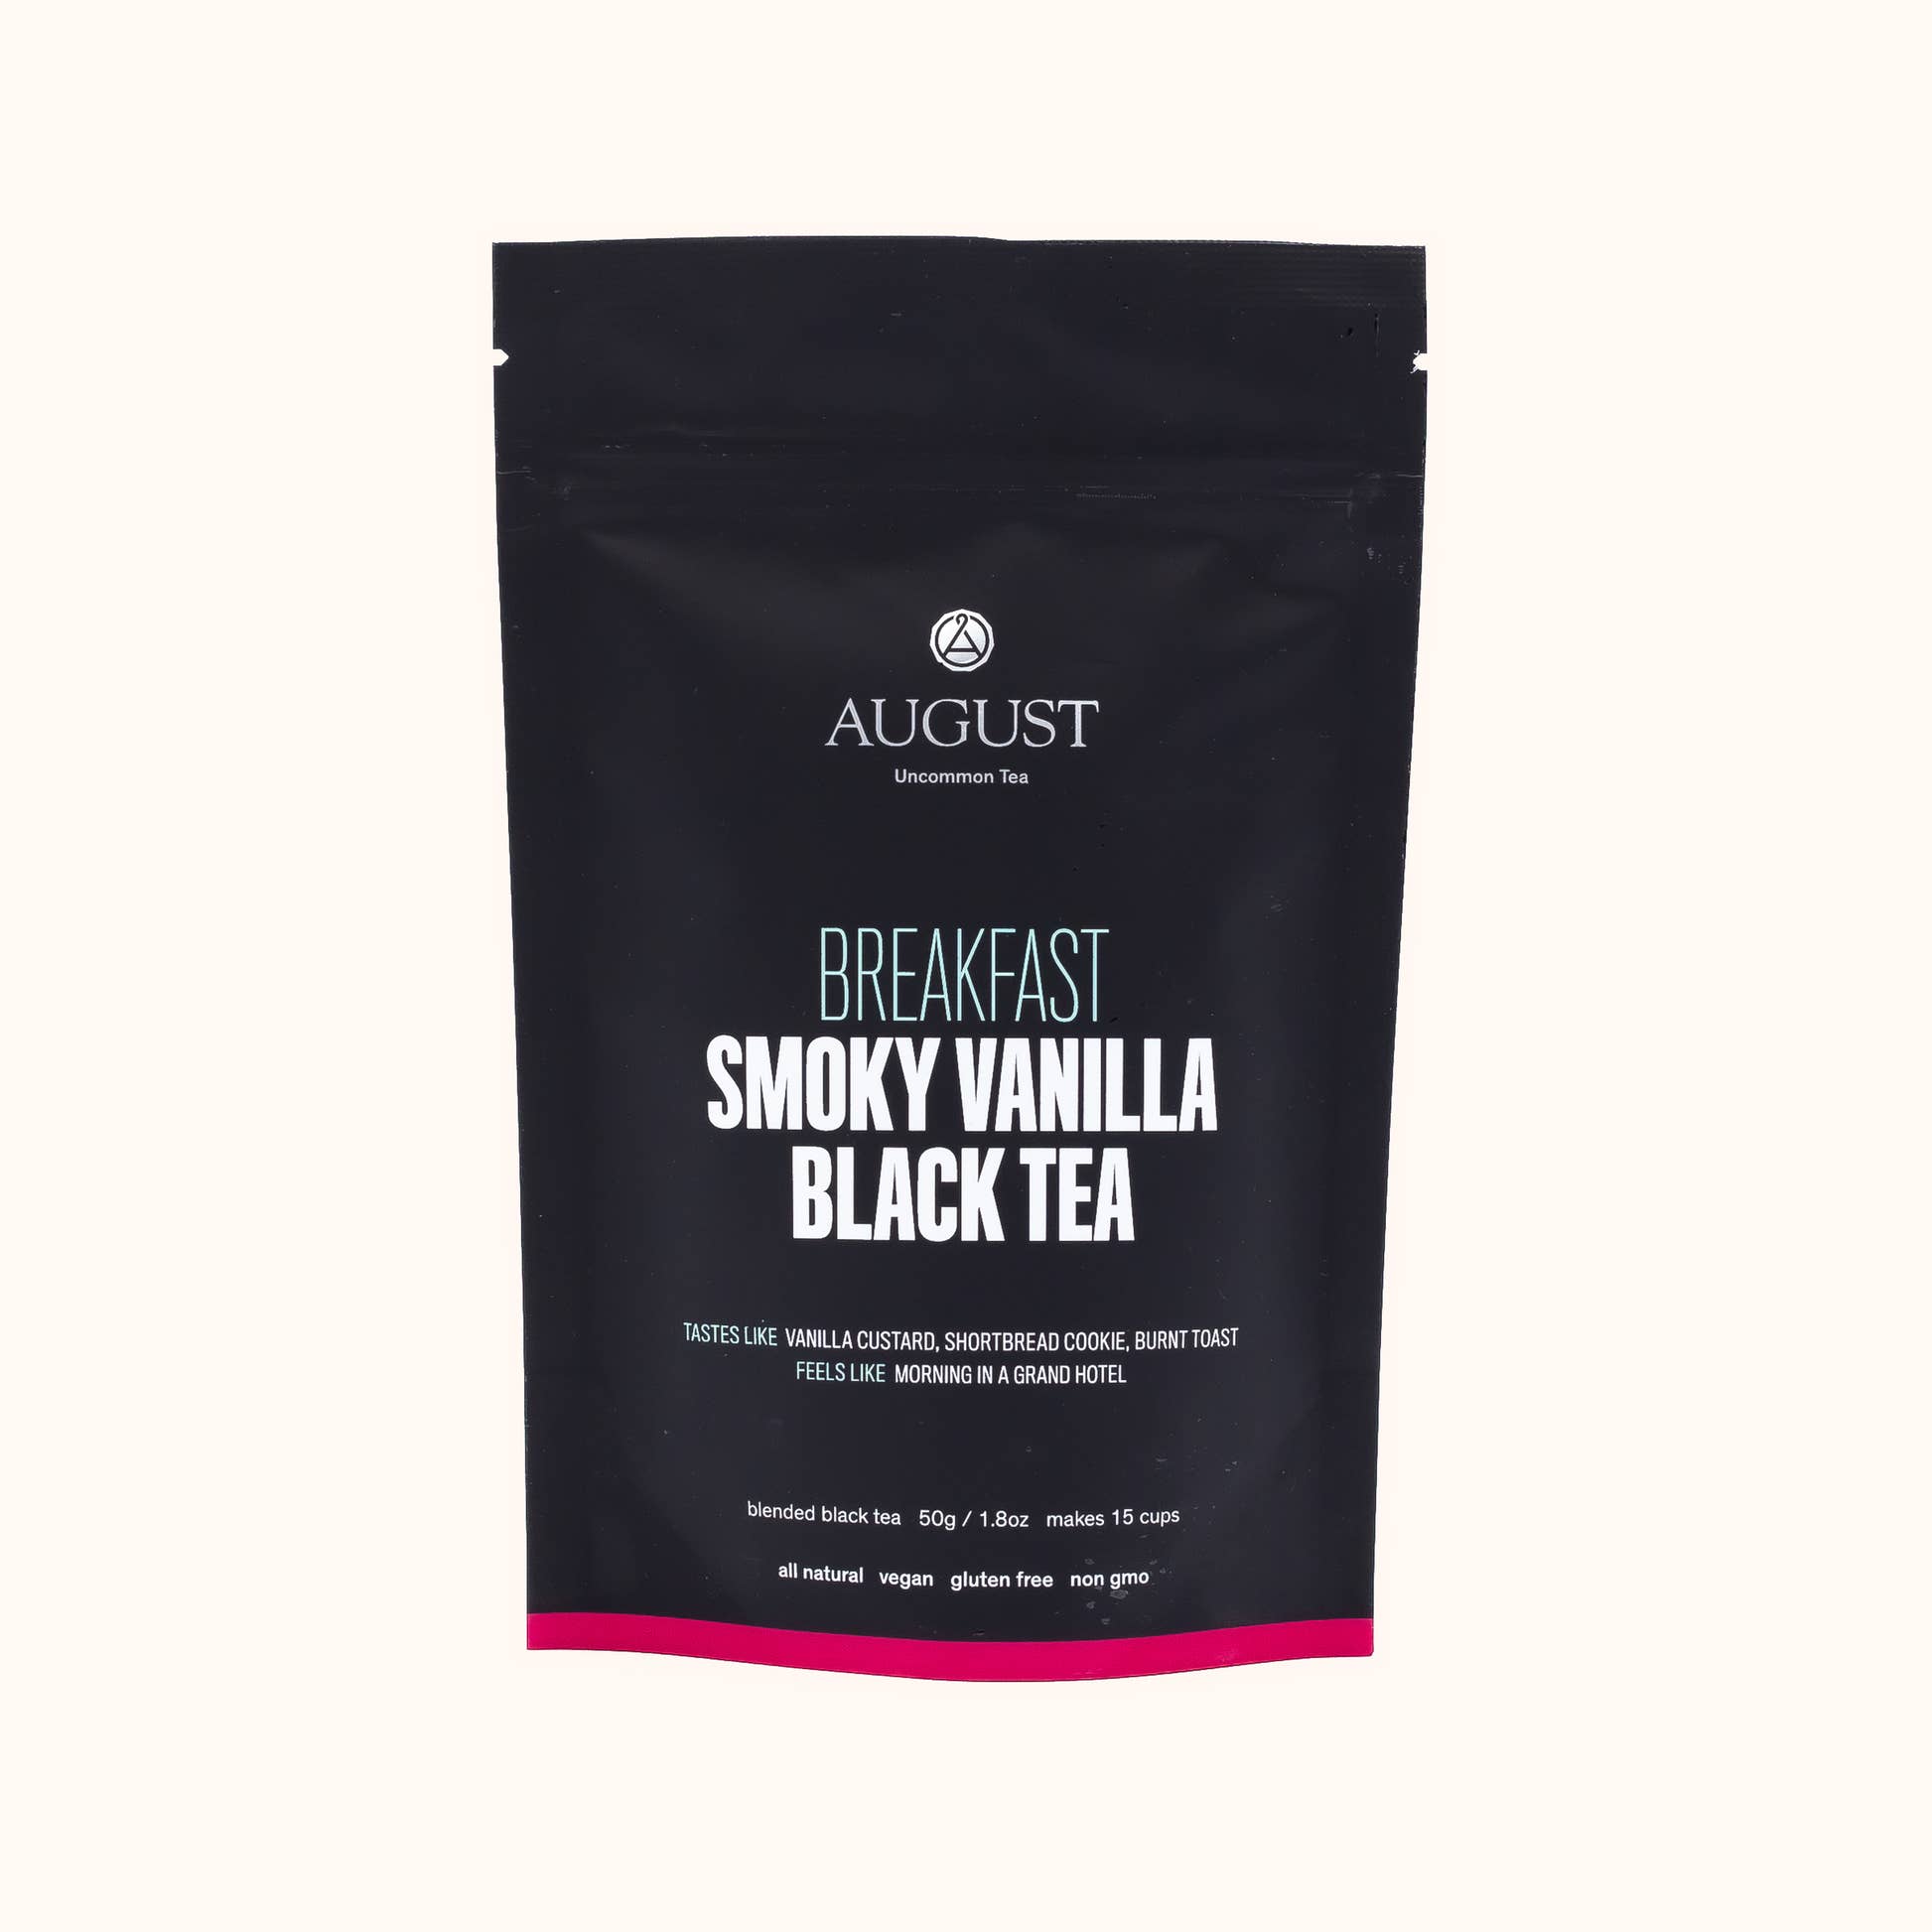 Breakfast by August Uncommon loose leaf tea pouch described as a "Smoky Vanilla Black Tea"